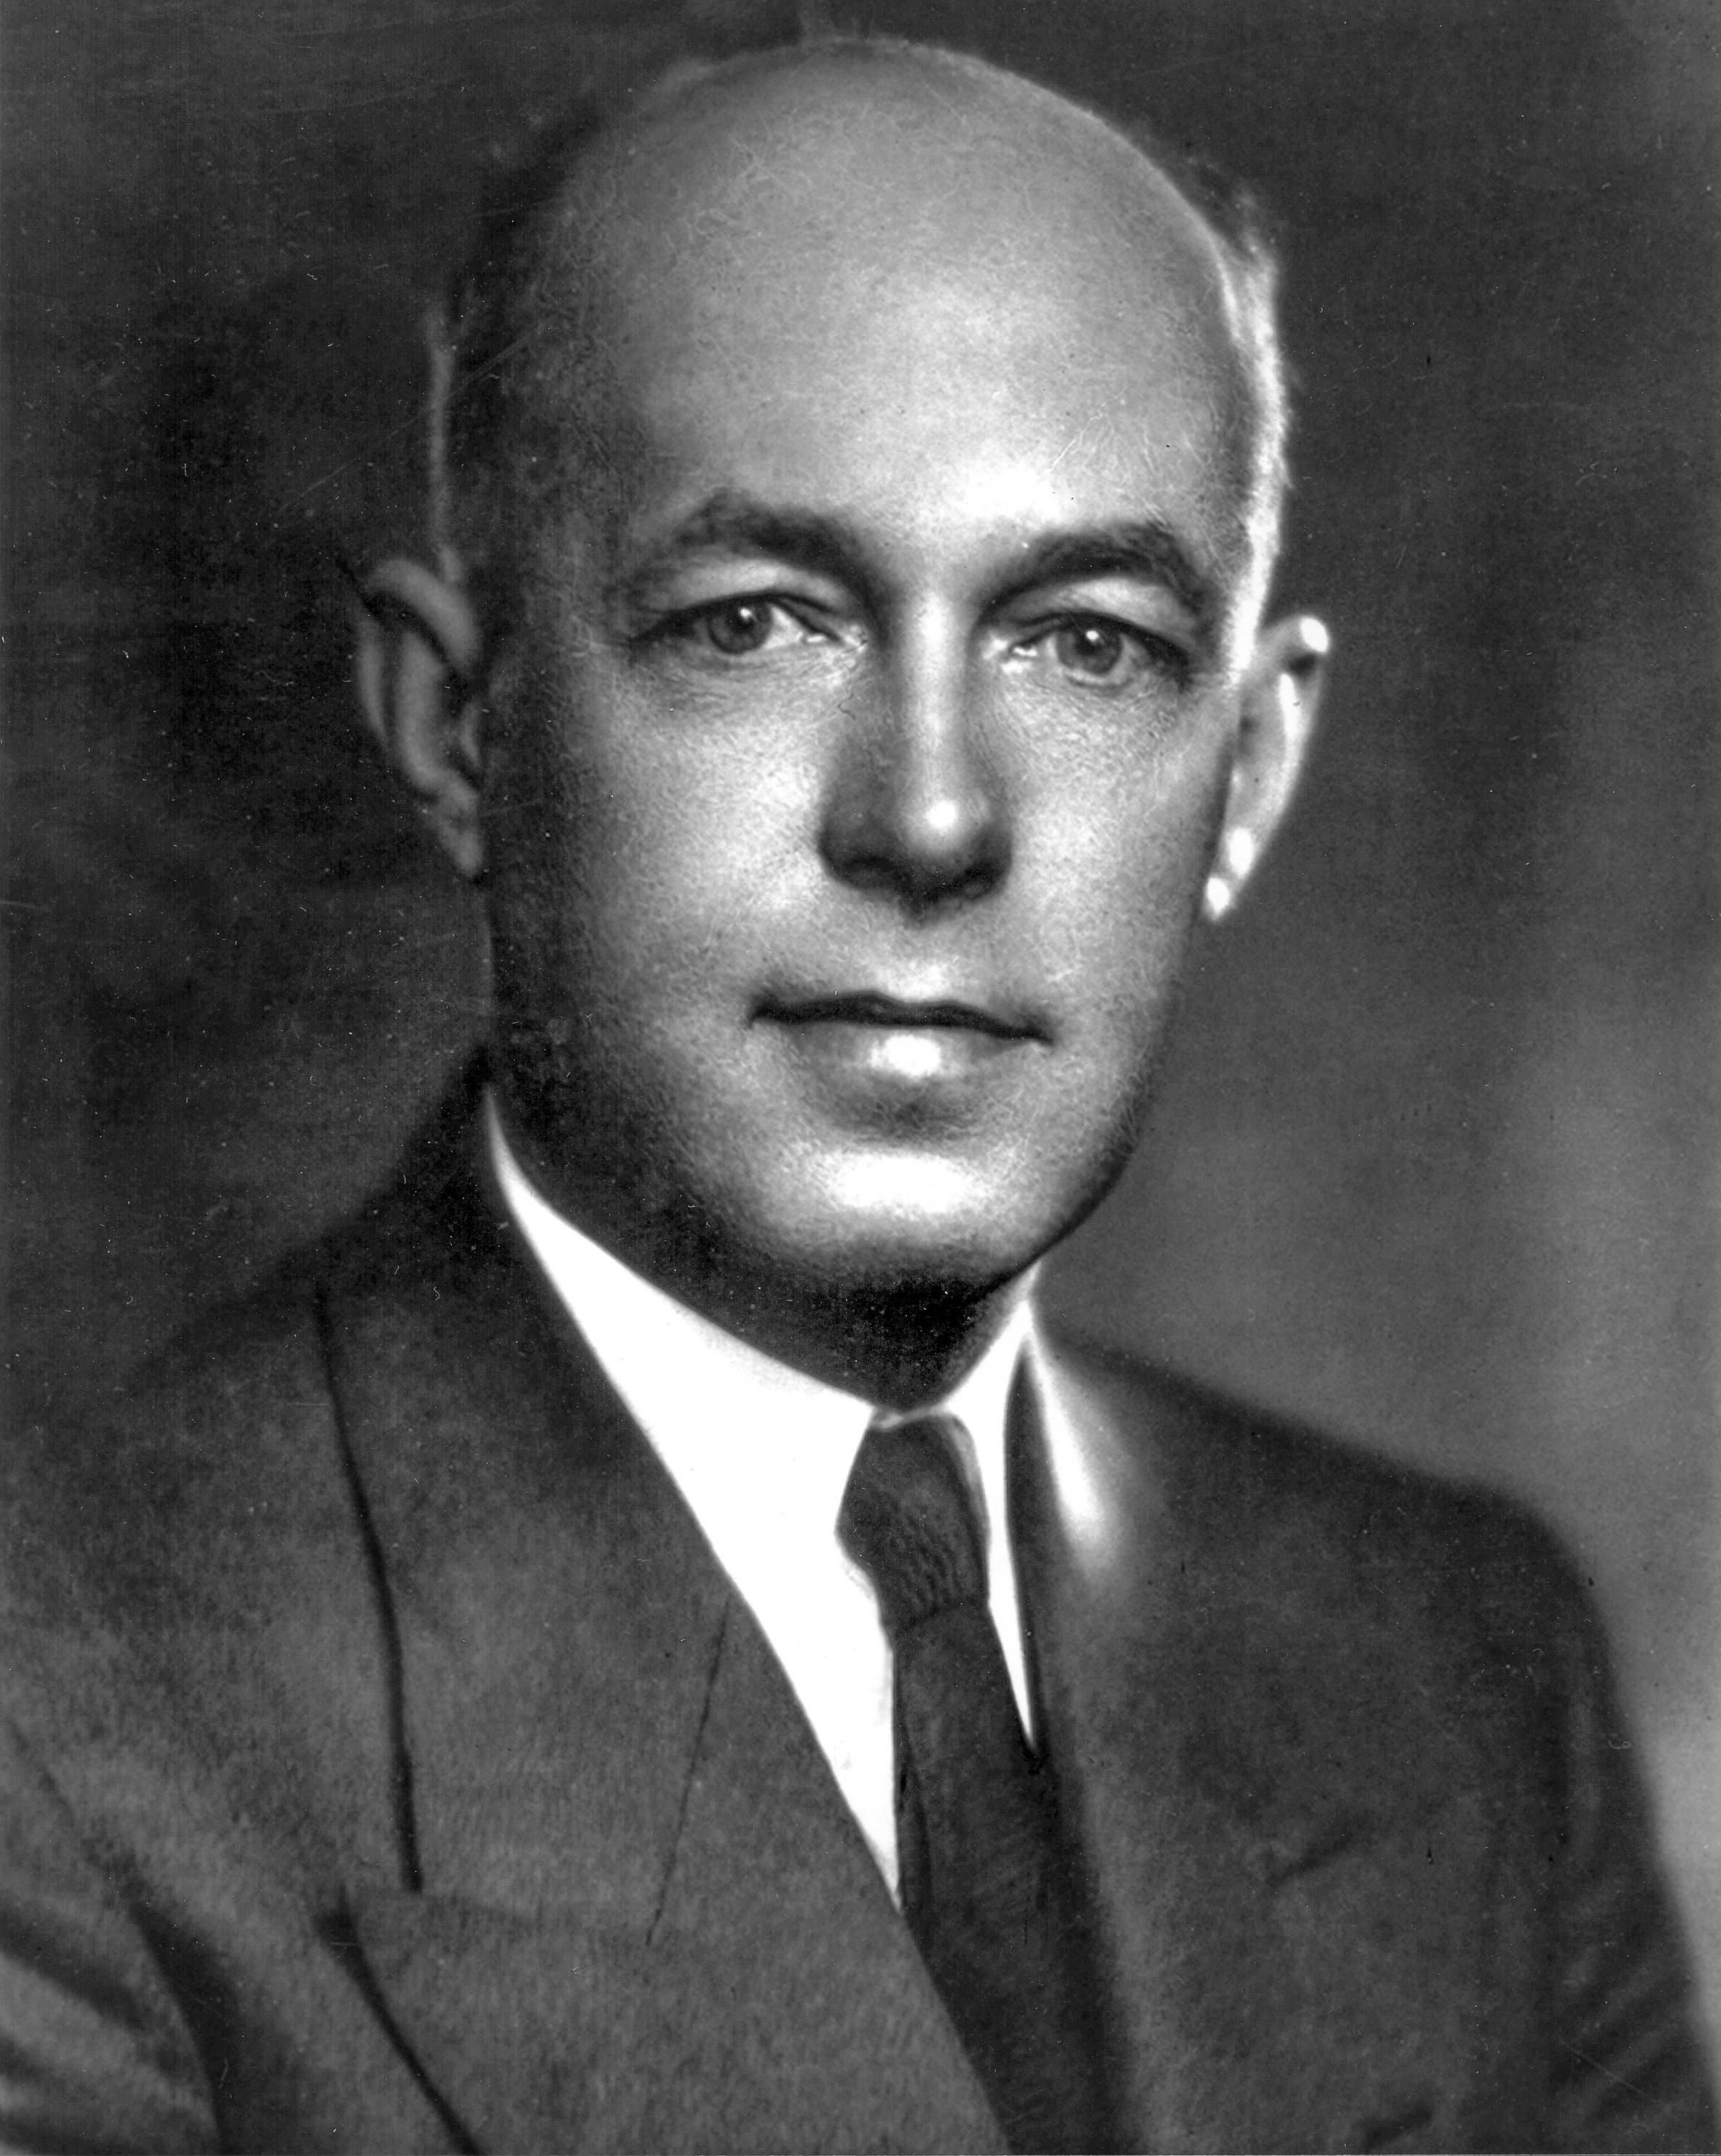 Portrait of Herbert O. Yardley